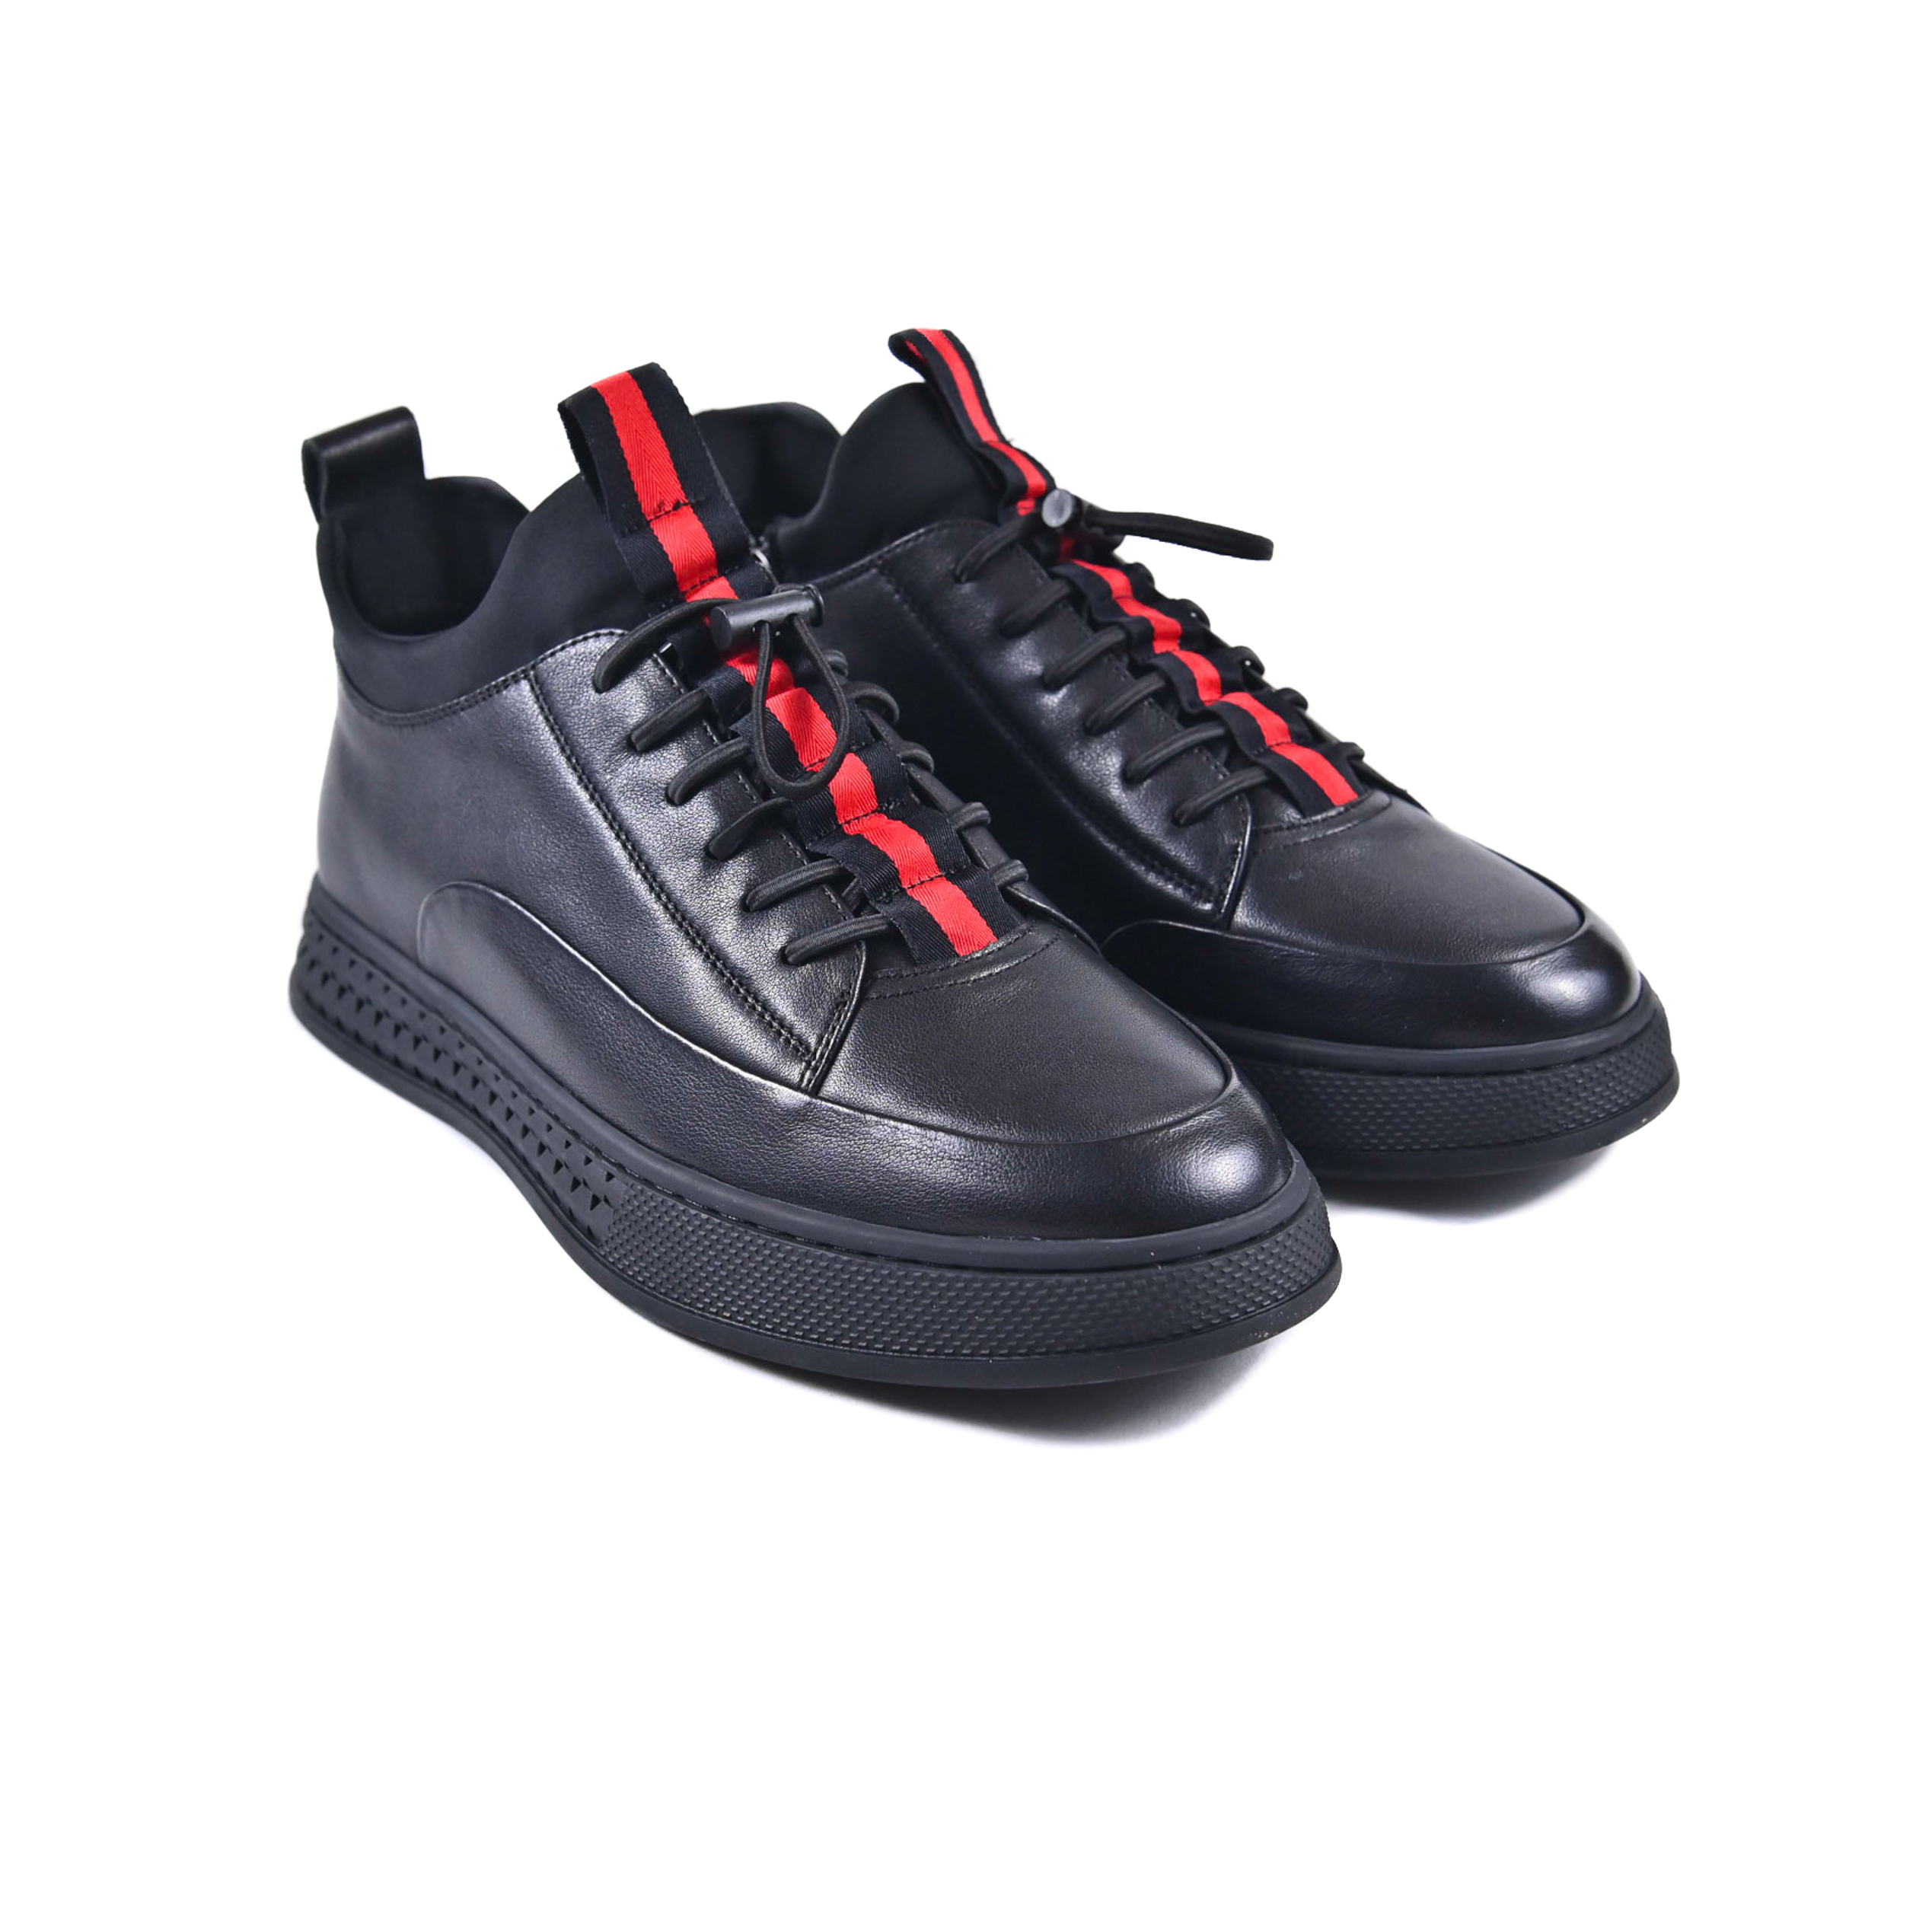 warrant Creed crew Pantofi casual barbati din piele naturala de culoare negru cu fermoar  lateral si siret elastic. - Bottino